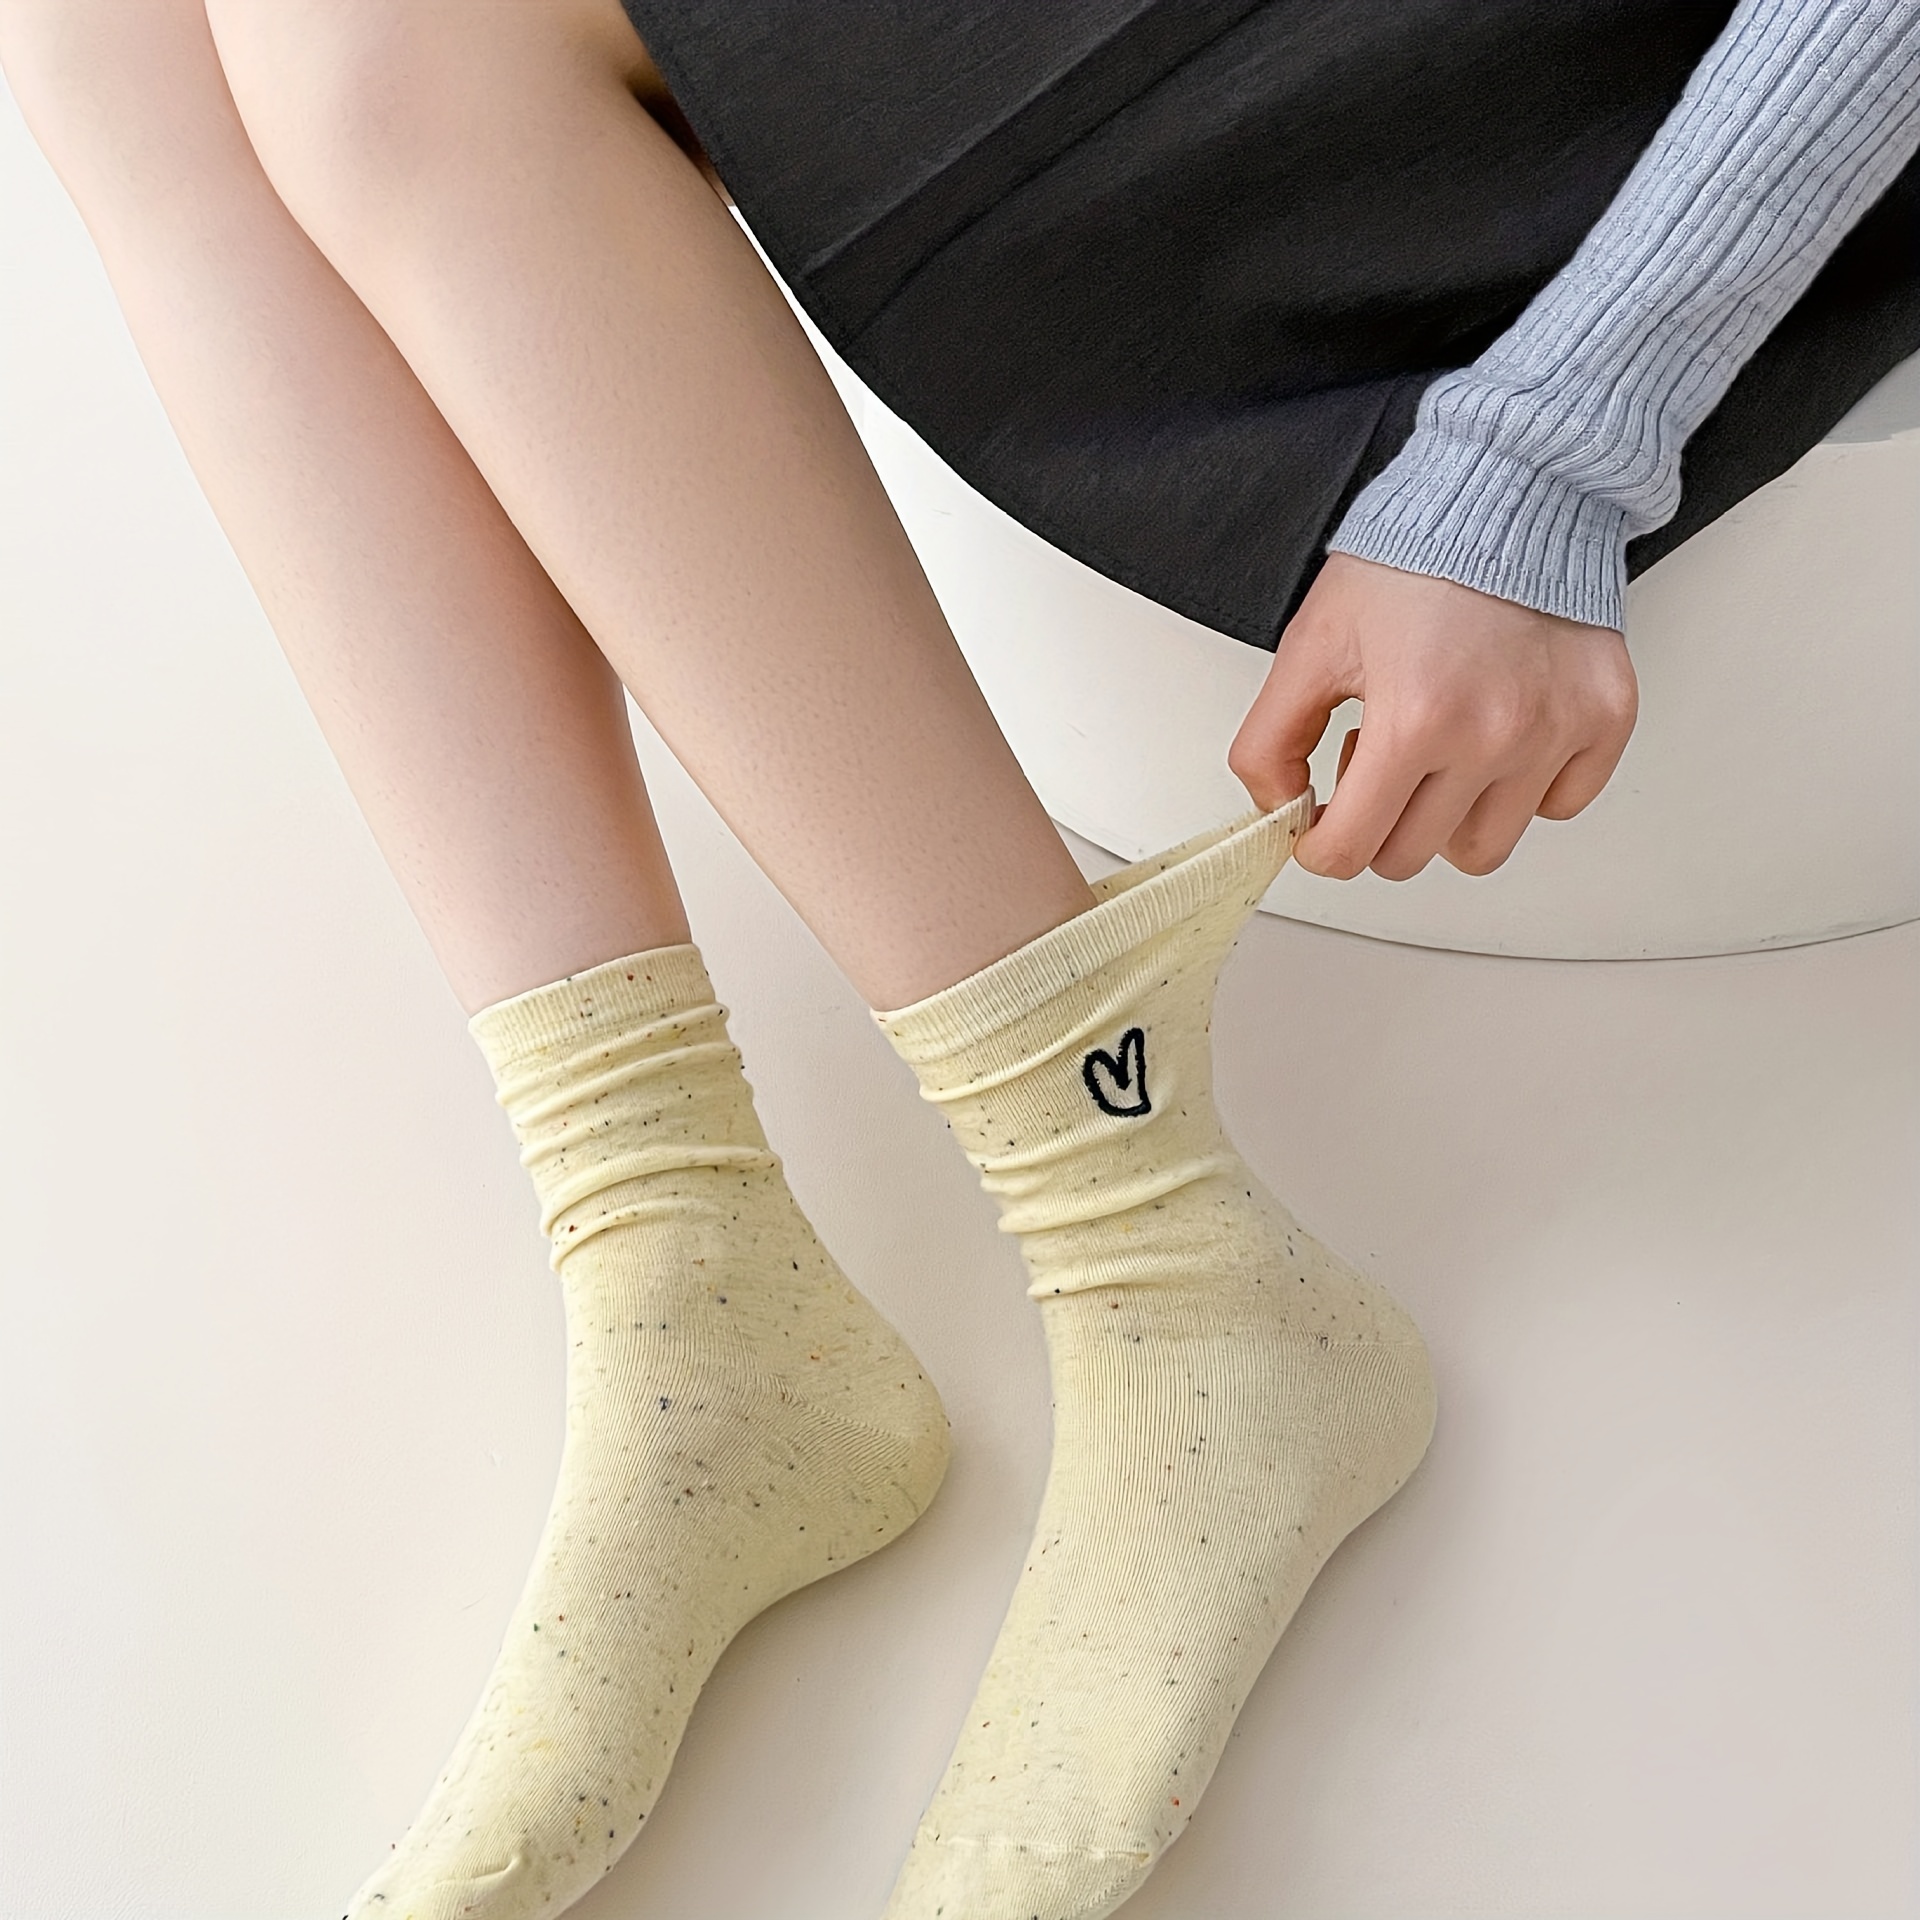 Heart Embroidery Socks, Comfy & Cute Mid Tube Socks, Women's